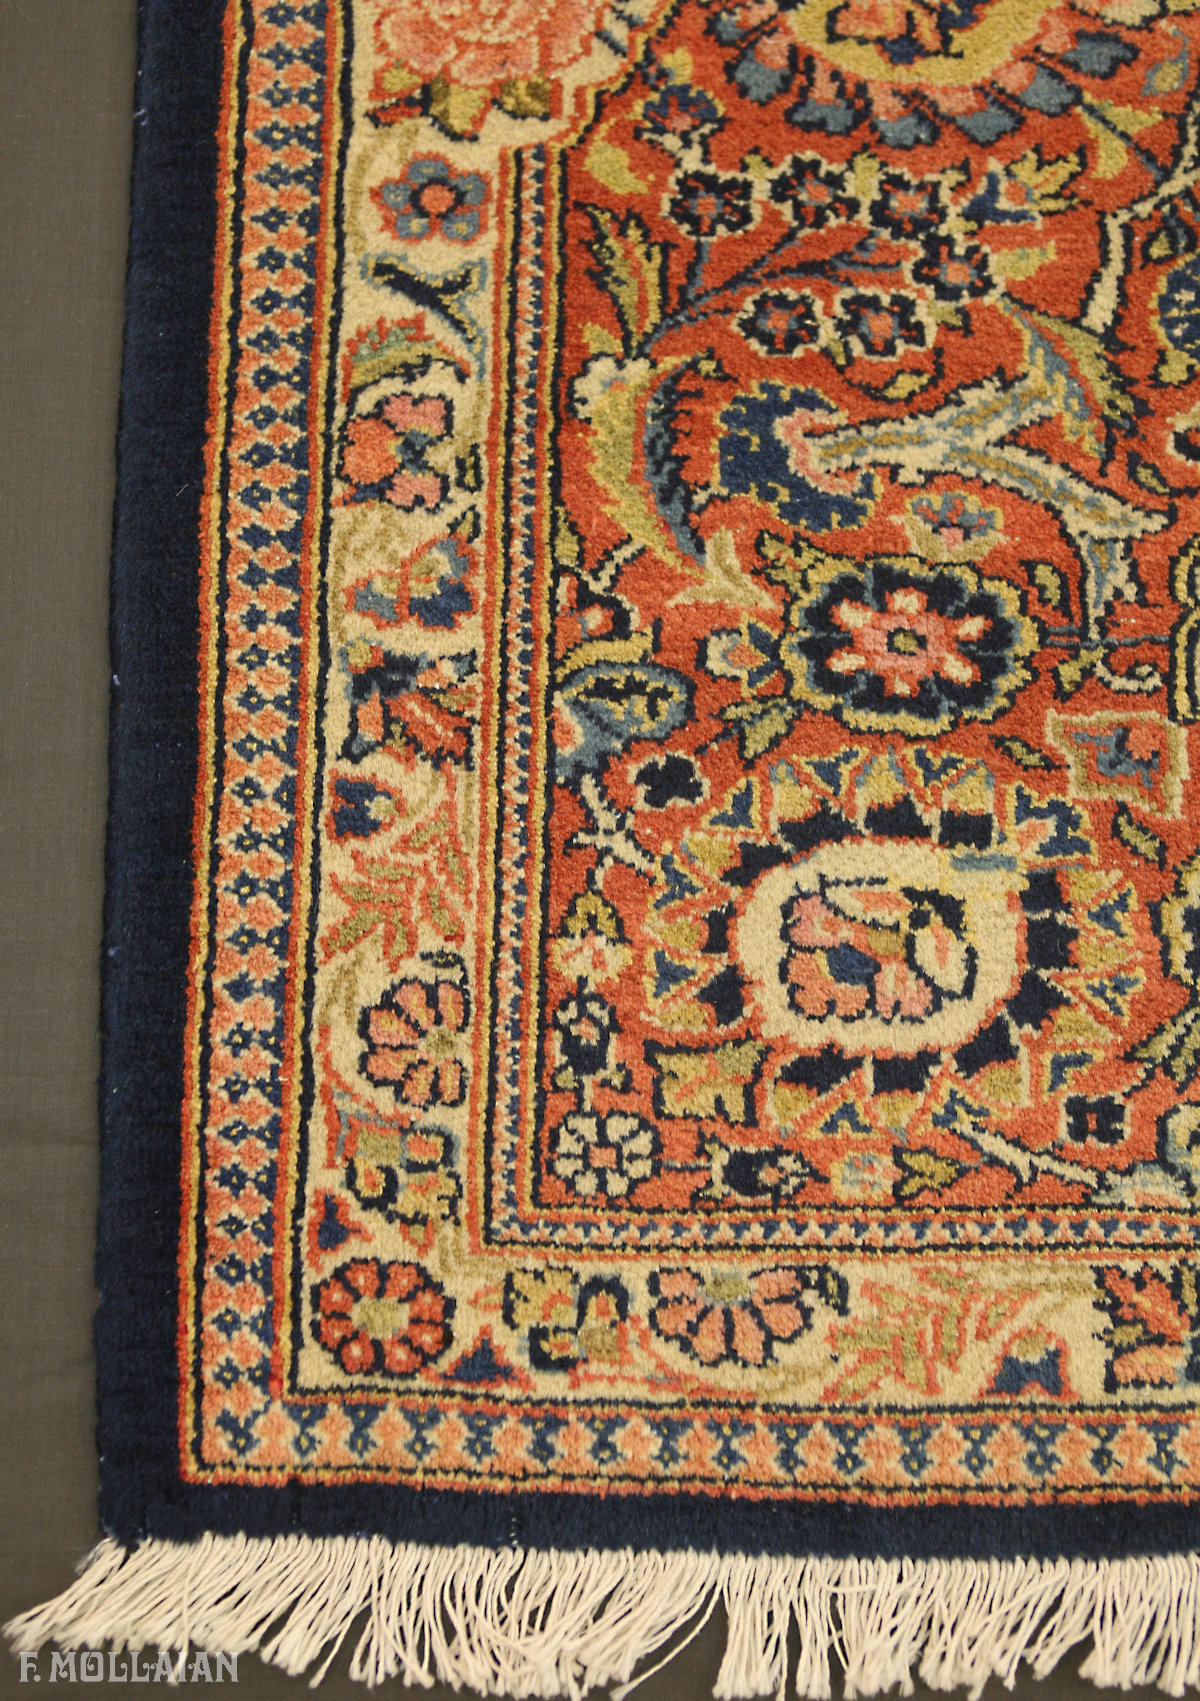 Antique Persian Kashan Dabir Carpet n°:44841219